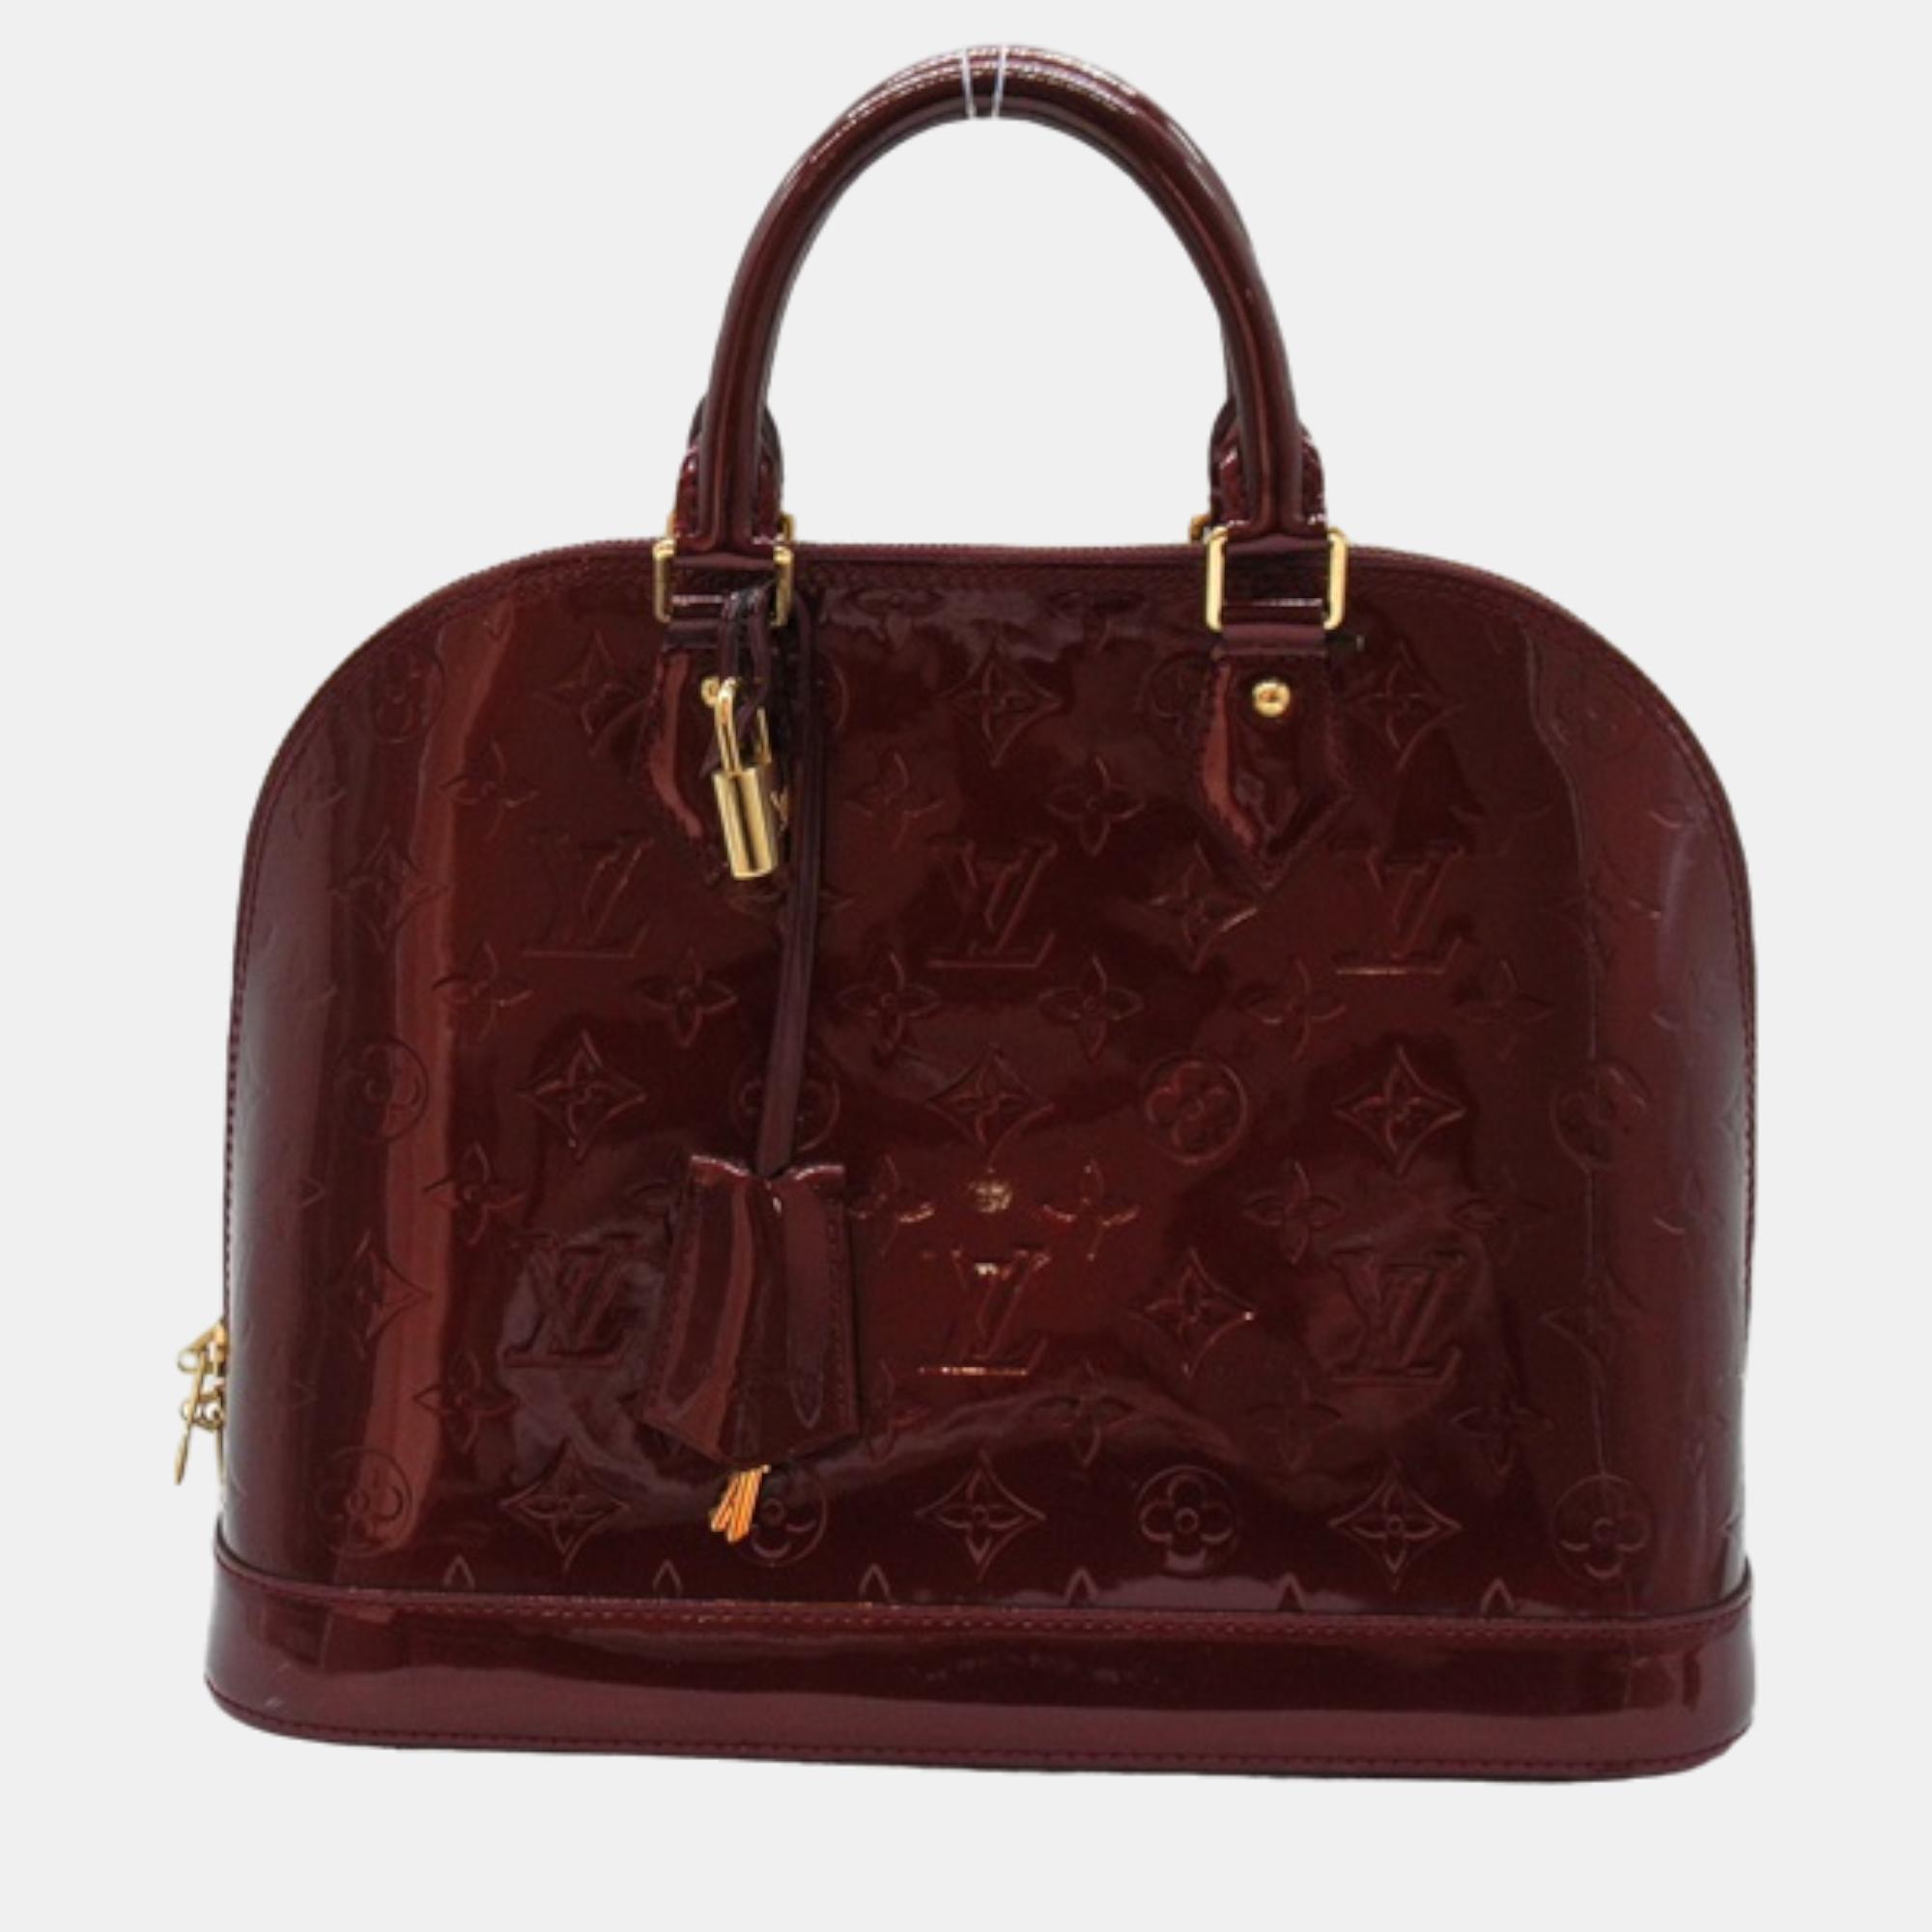 Pre-owned Louis Vuitton Red Leather Monogram Vernis Alma Pm Handbag